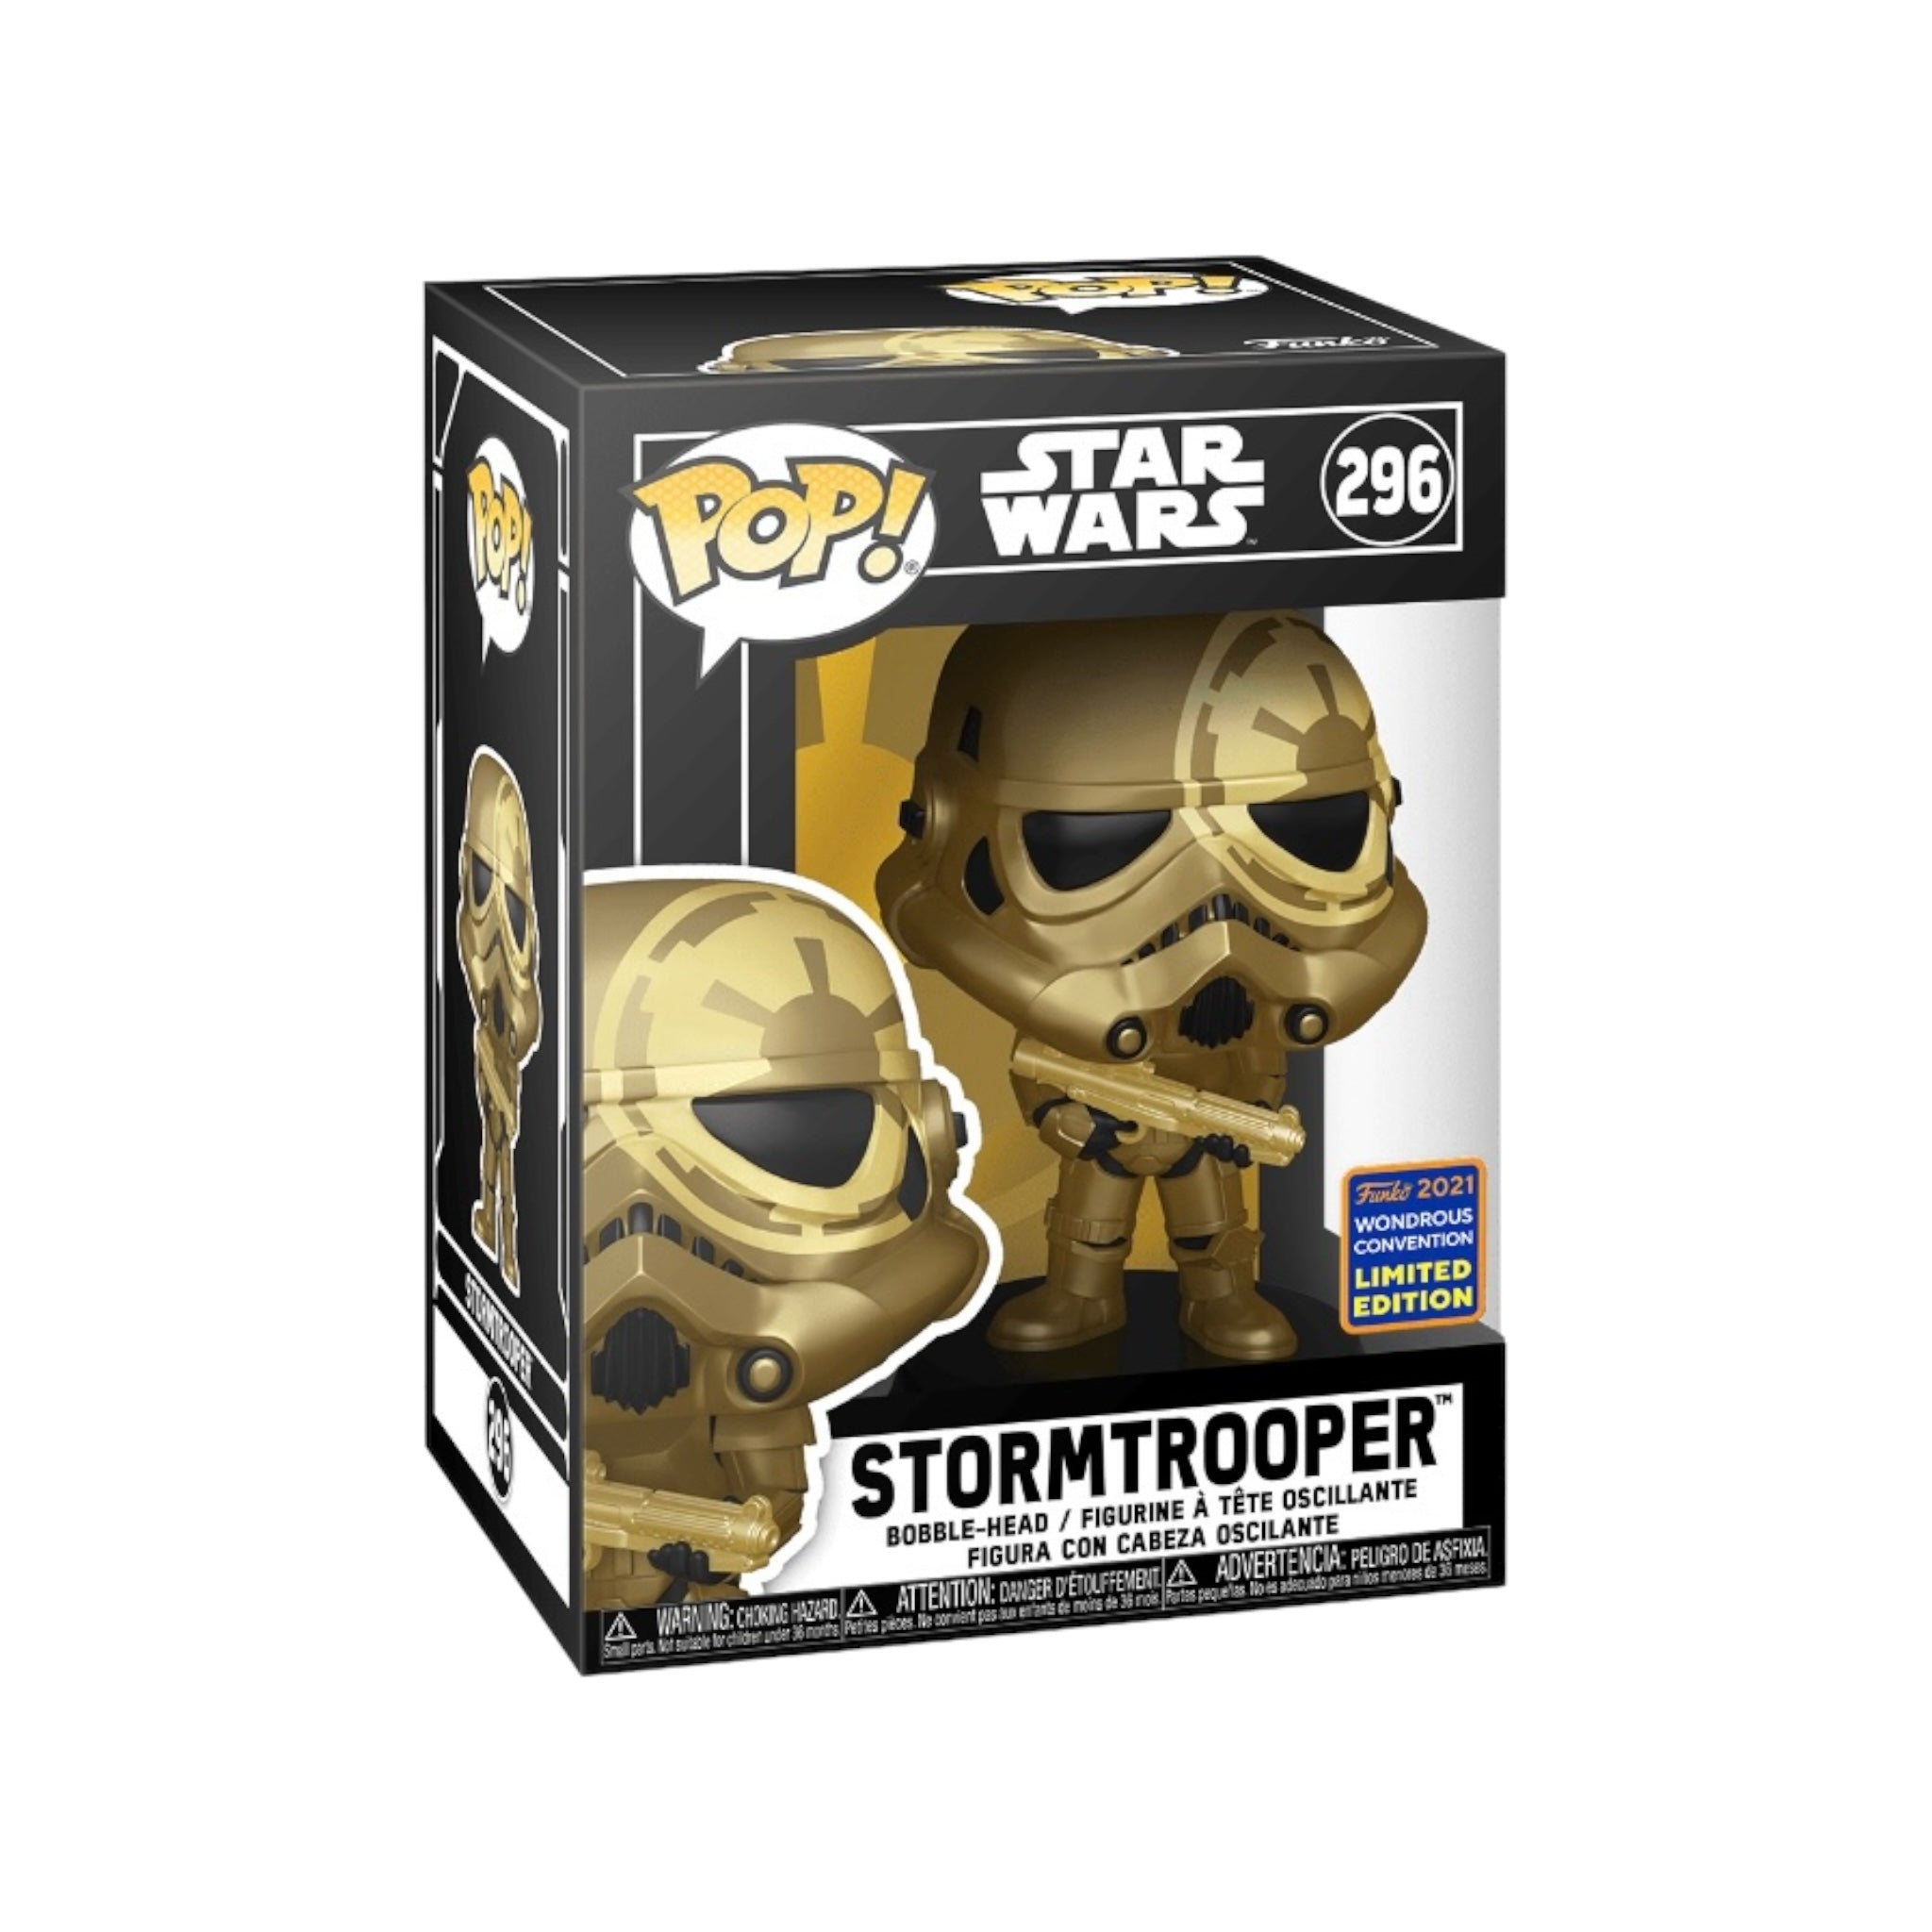 Stormtrooper #296 Funko Pop! - Star Wars - WonderCon 2021 Shared Exclusive